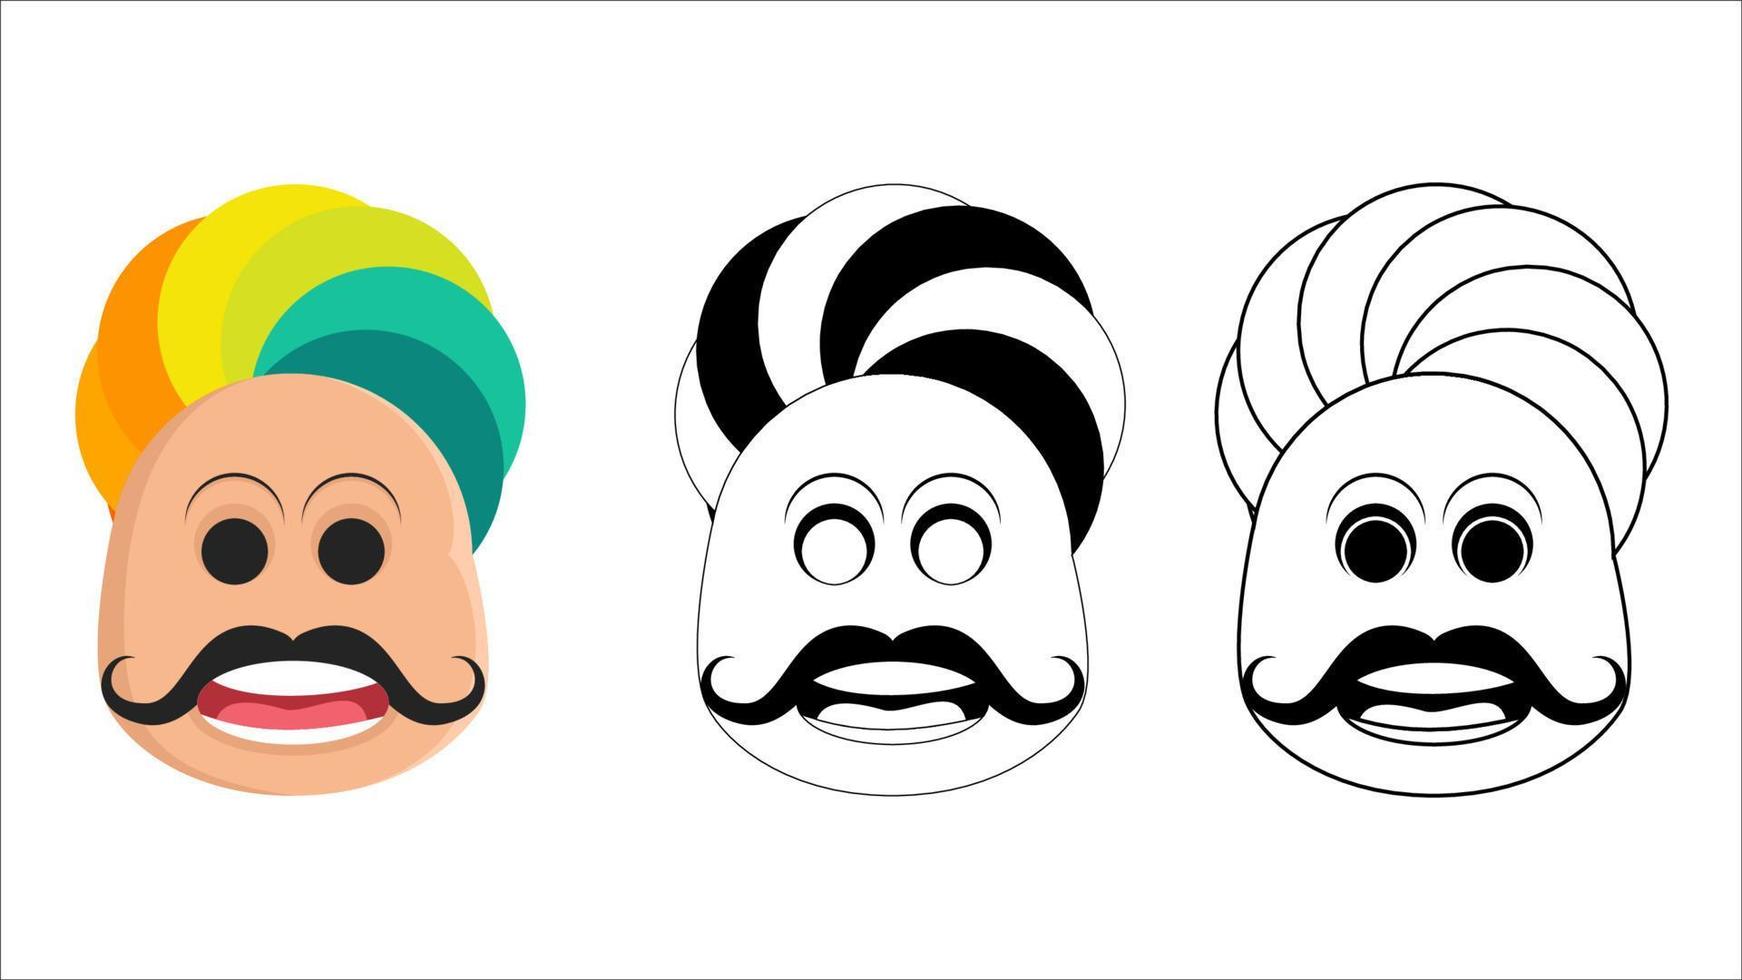 marwadi Mens gezicht vlak vector illustratie, Indisch Mens gezicht vlak vector.